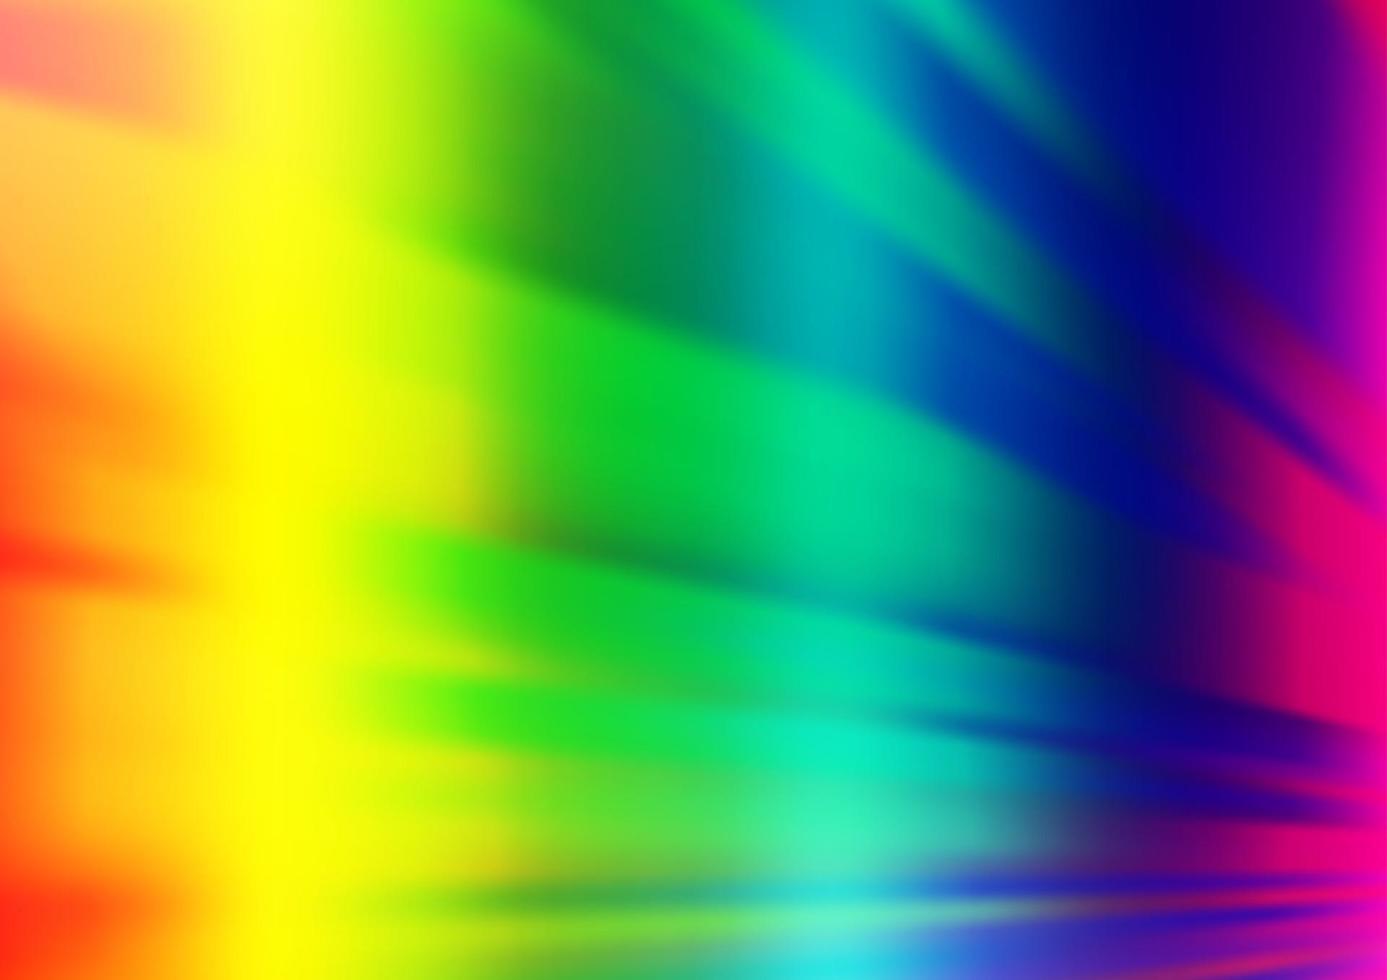 Fondo de vector de arco iris multicolor claro con líneas rectas.